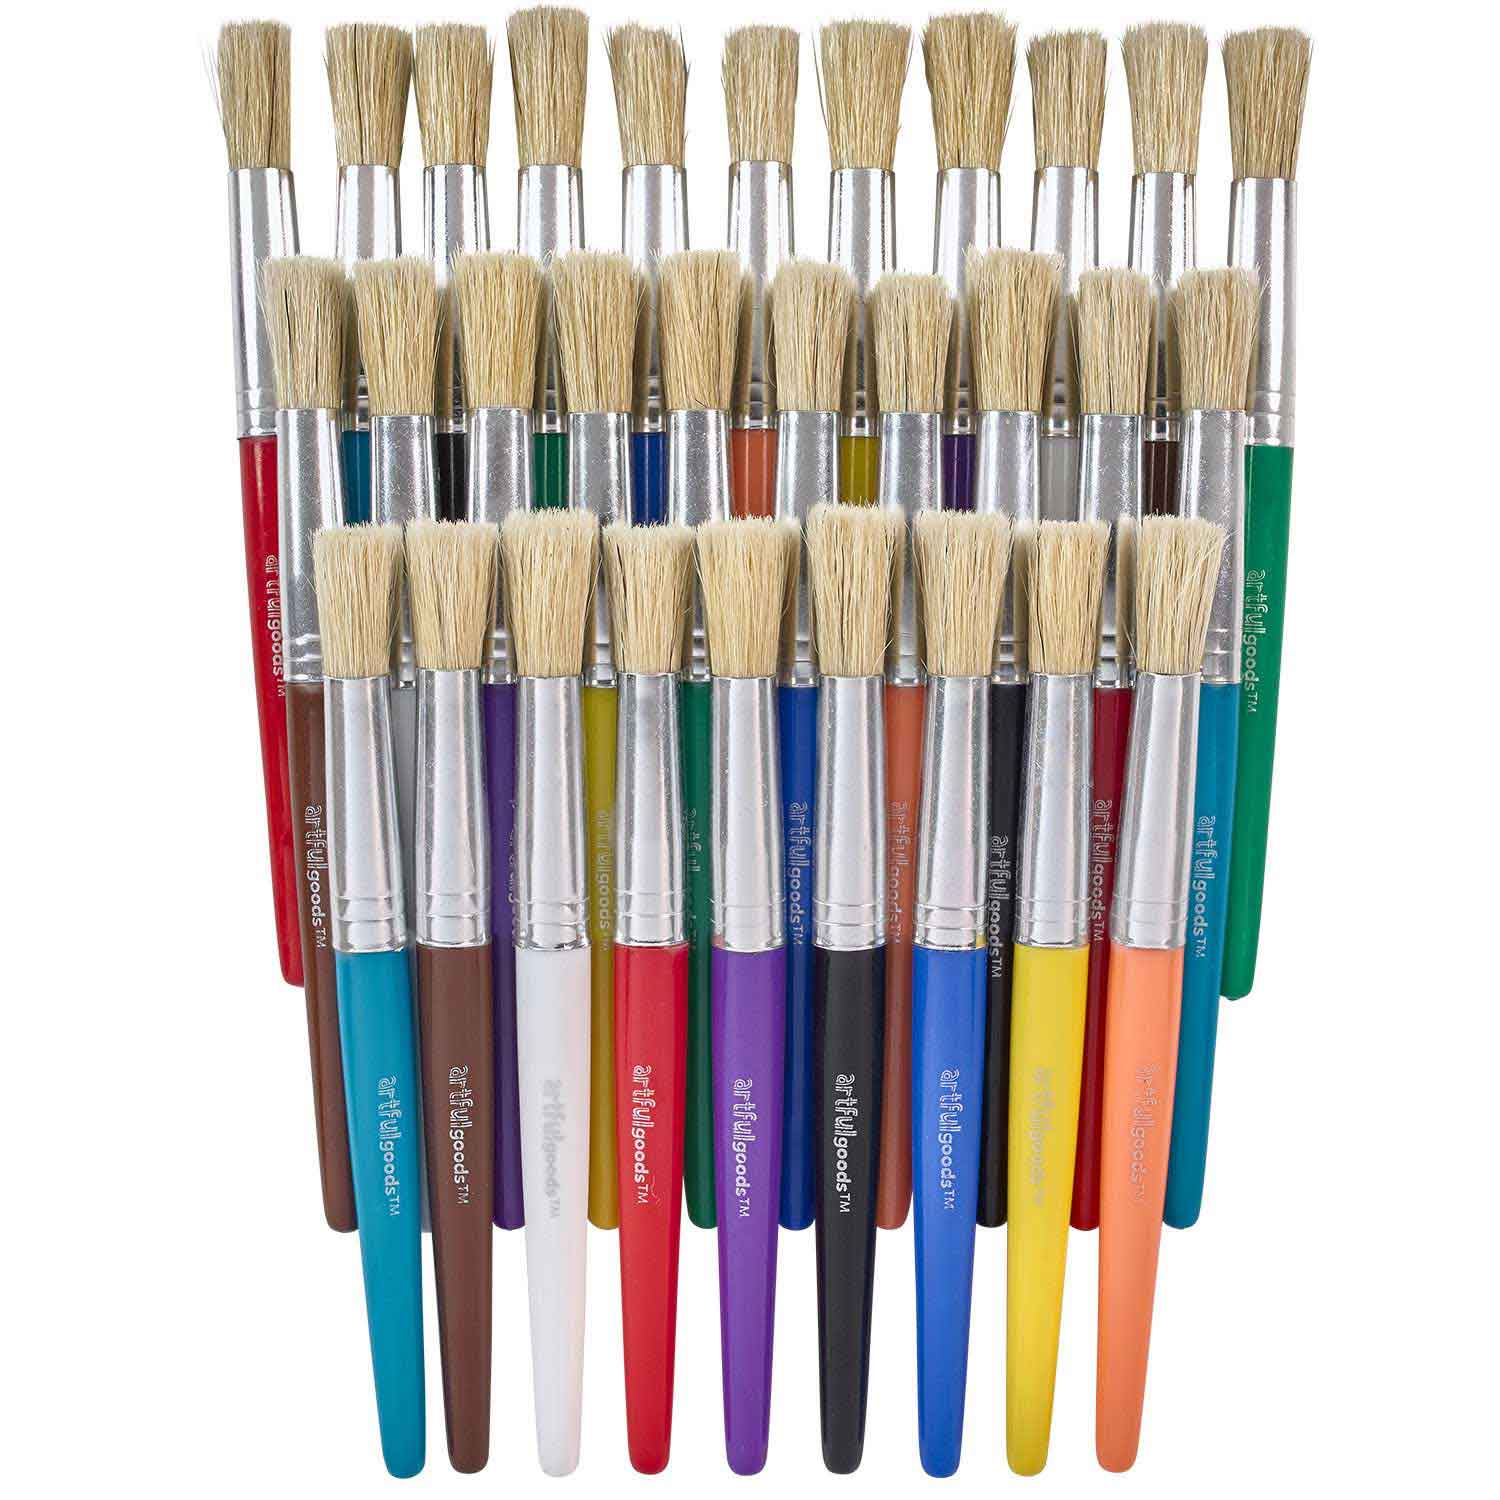 No Spill Paint Cups, 5/pk - Paint Brushes & Accessories - Paint